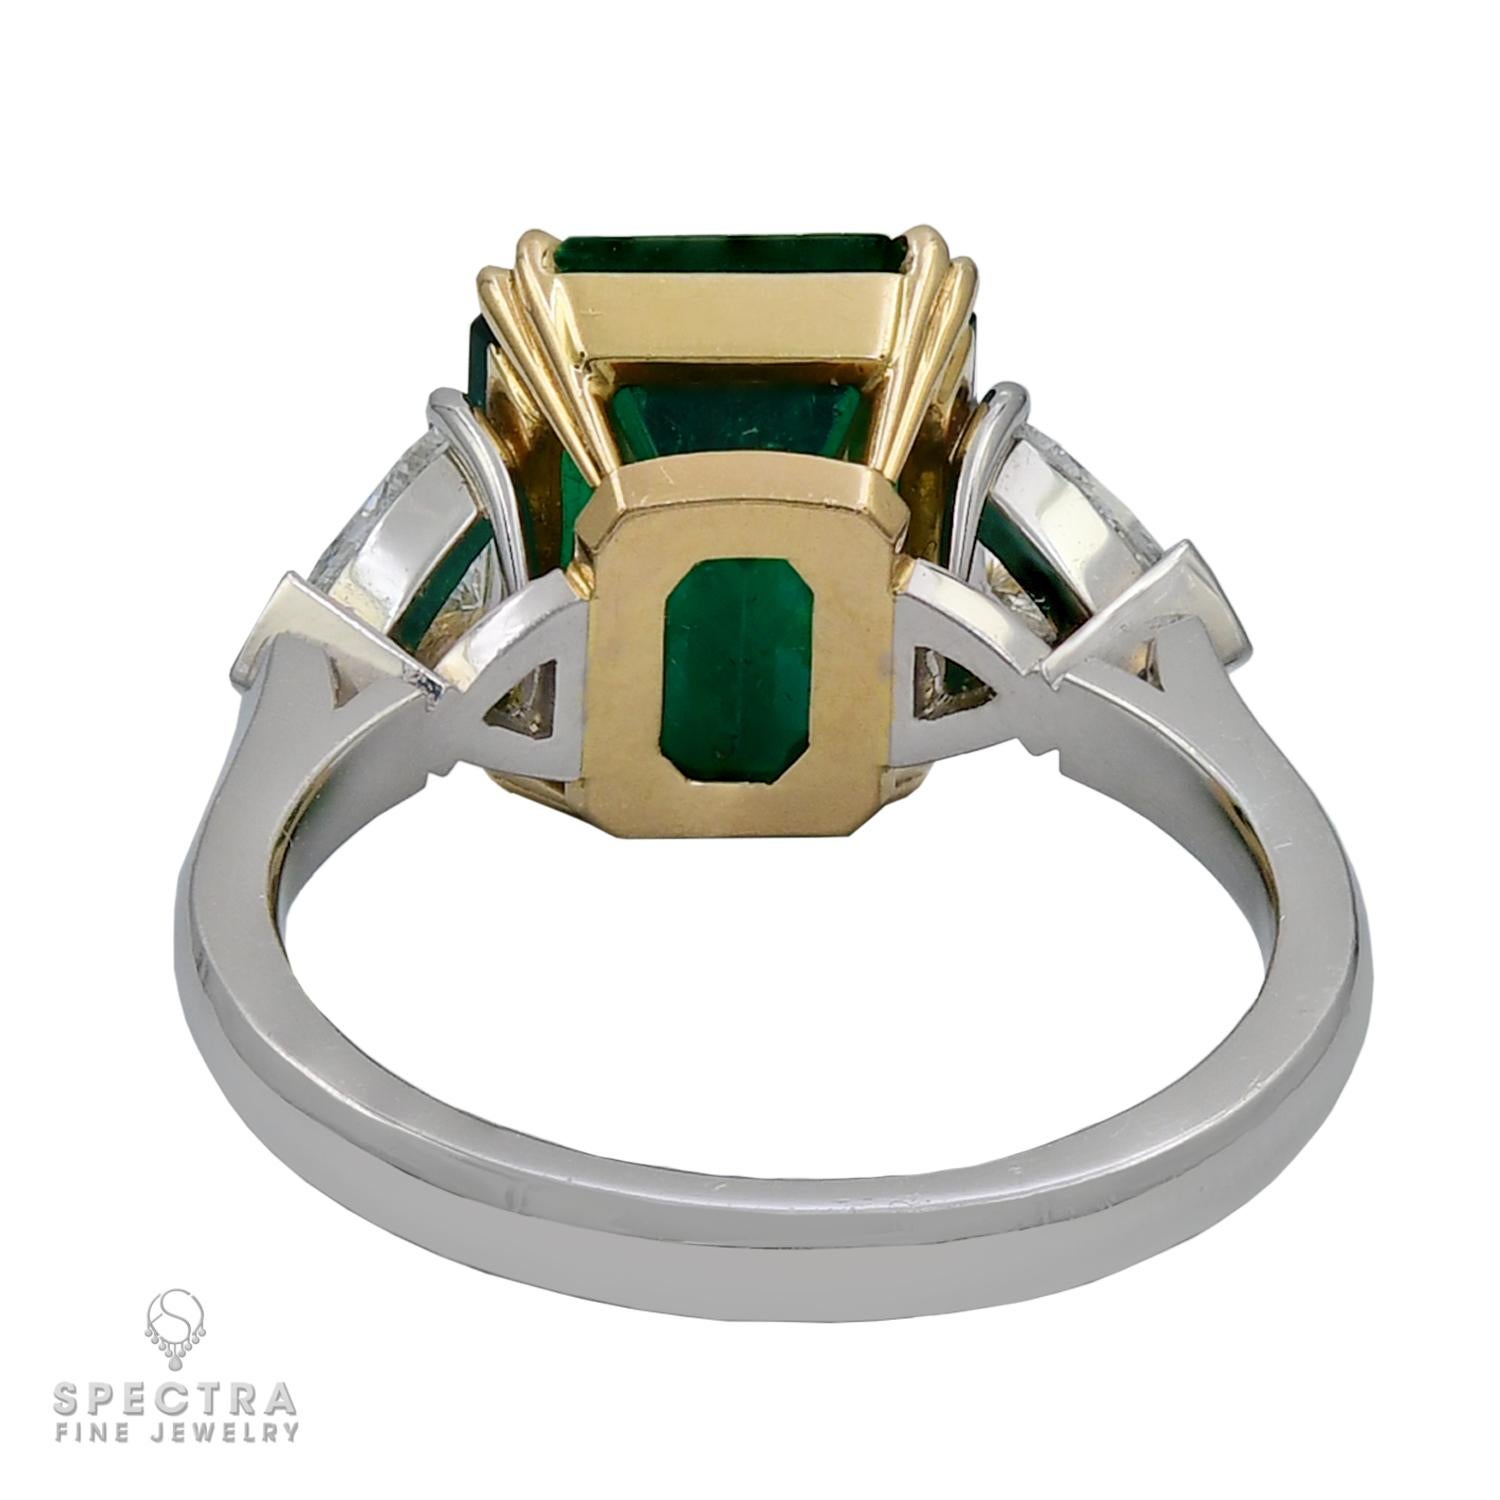 Spectra Fine Jewelry GRS Certified 4.09 Carat Colombian Emerald Diamond Ring For Sale 1